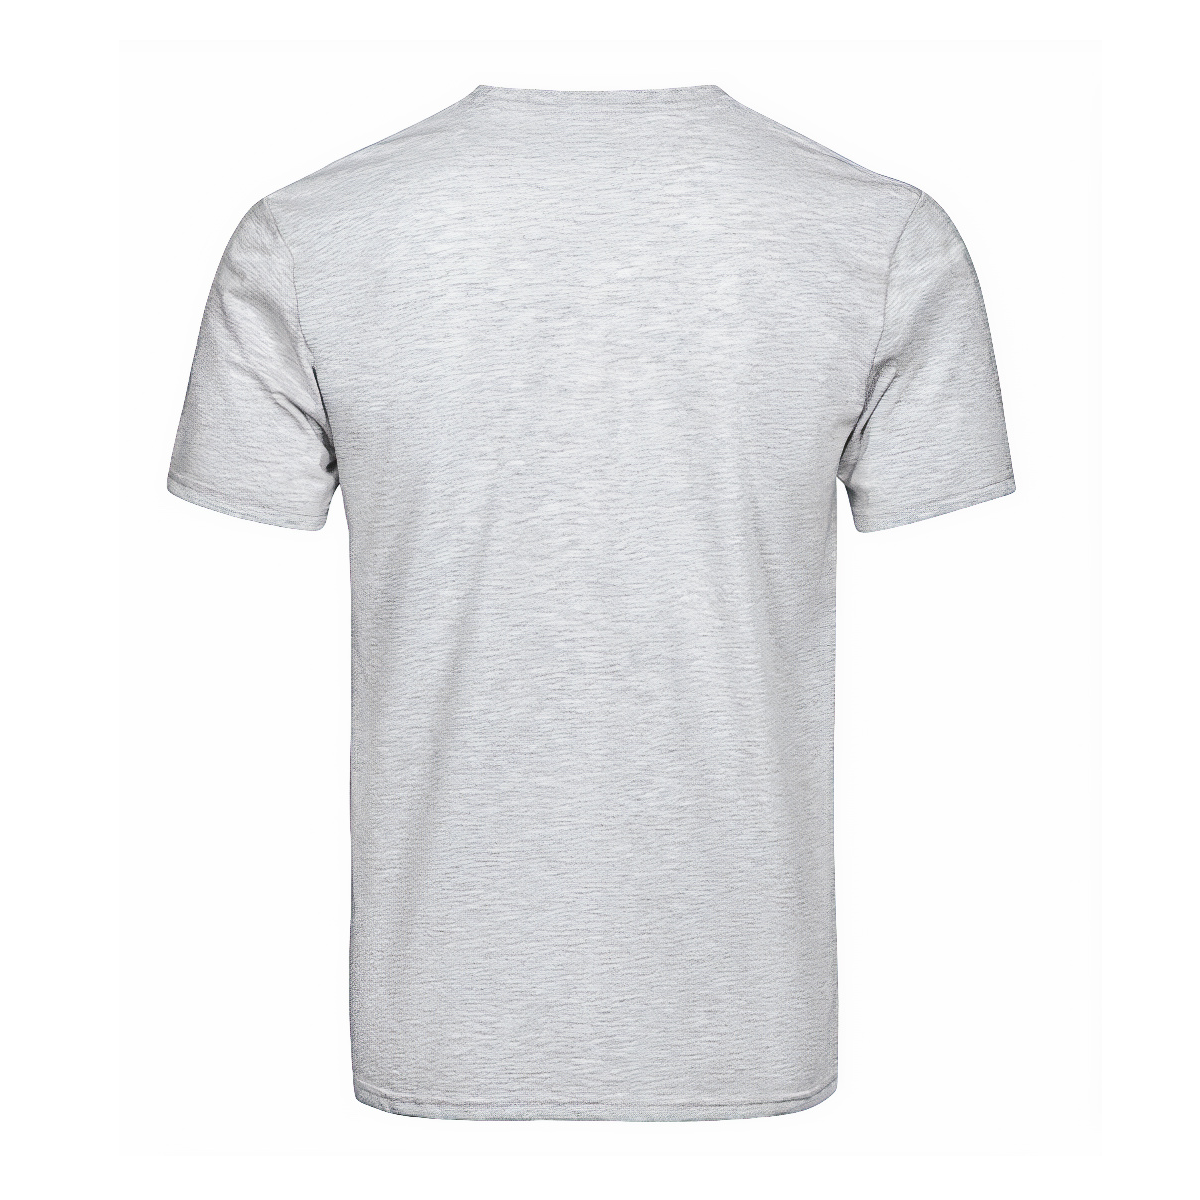 Brodie Tartan Crest T-shirt - I'm not yelling style